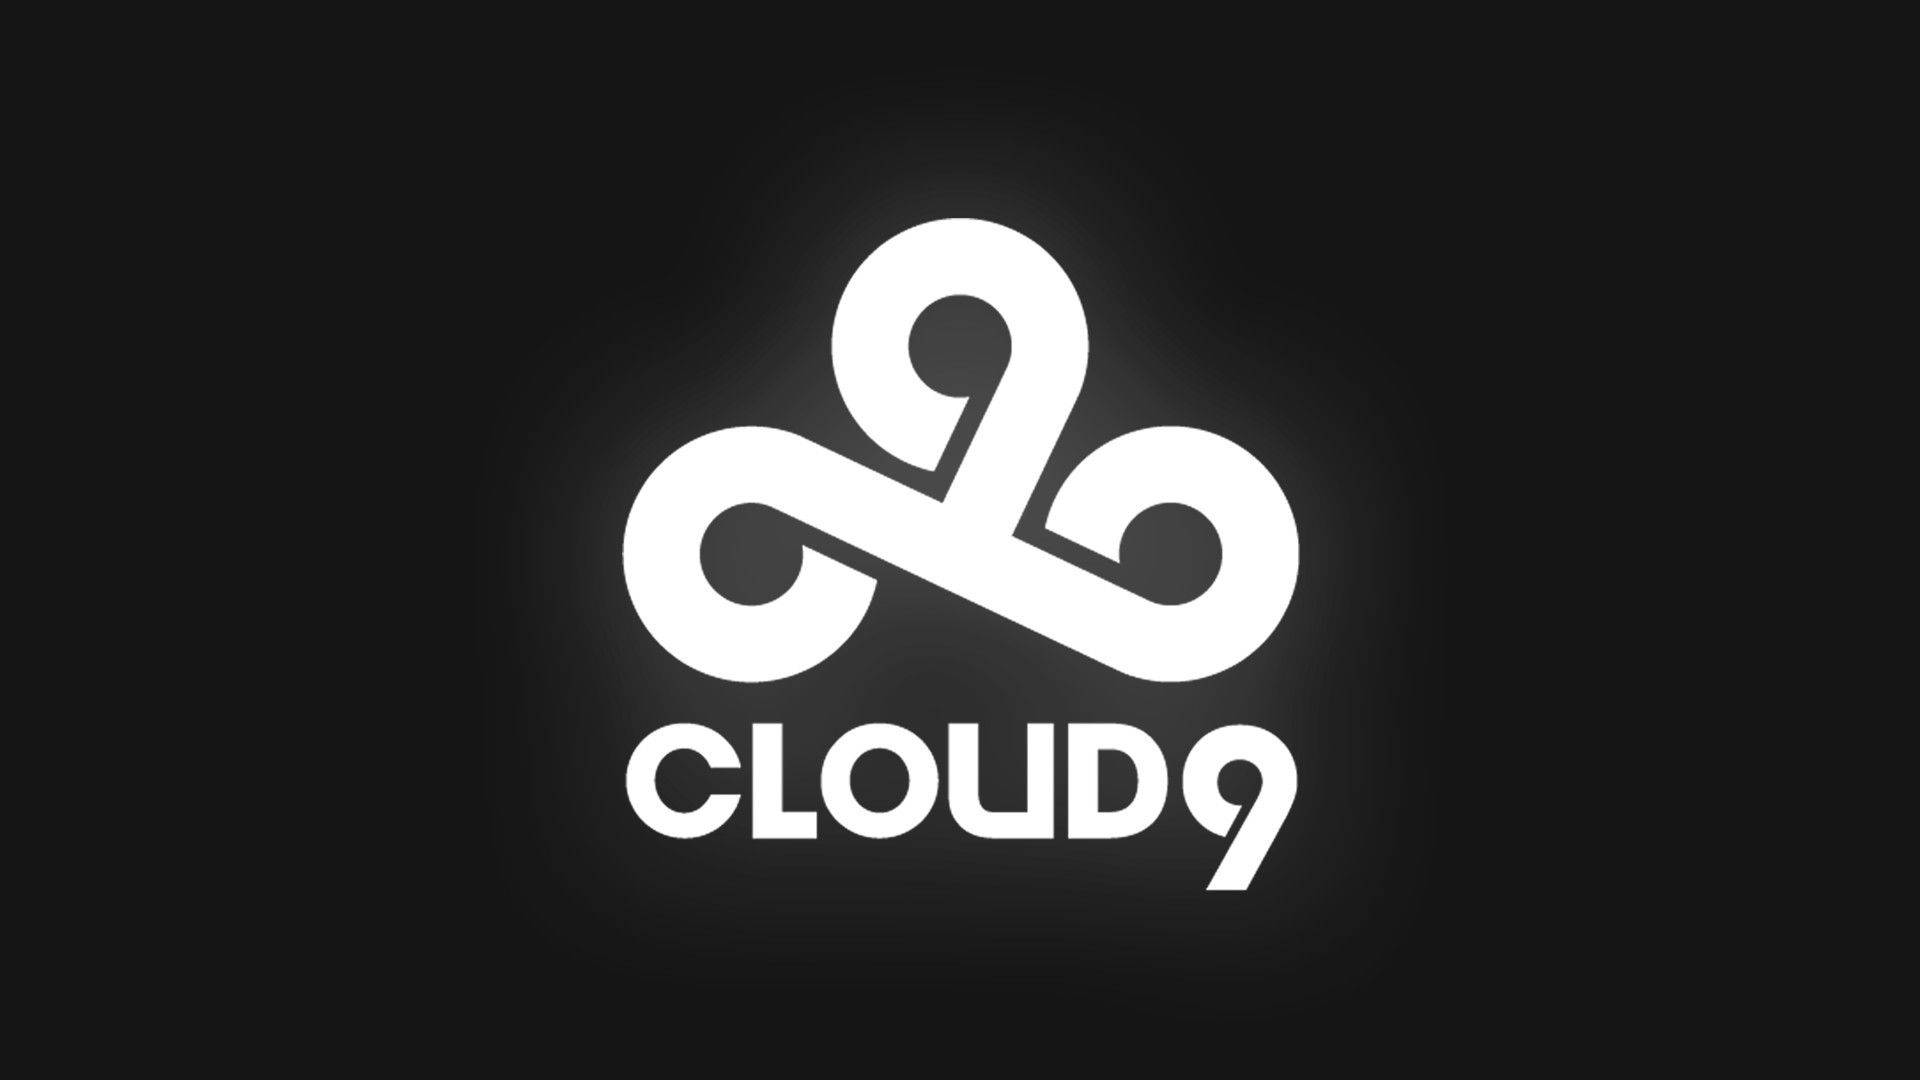 Cloud9 White Glowing Effect Logo Wallpaper